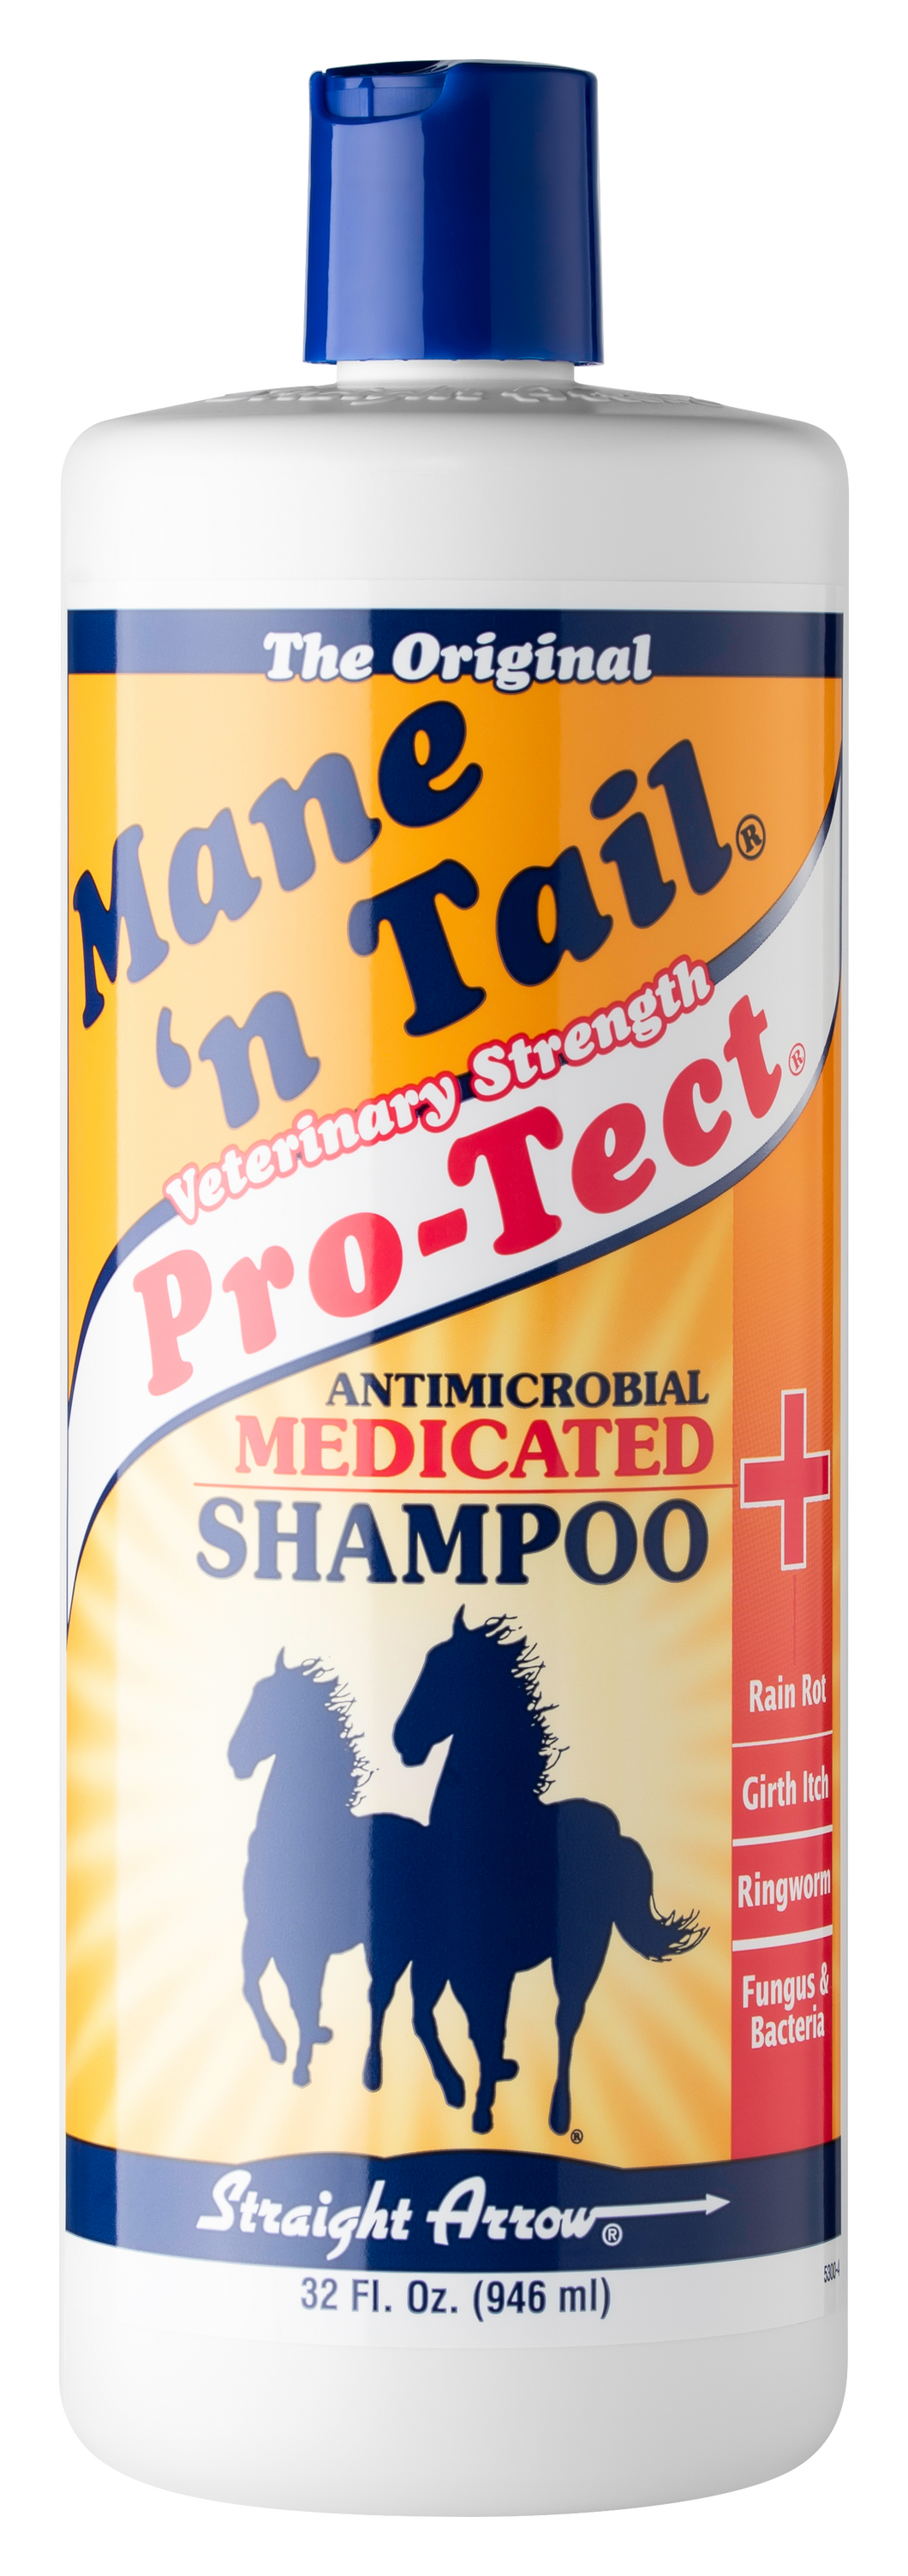 ProTect Medicated Shampoo